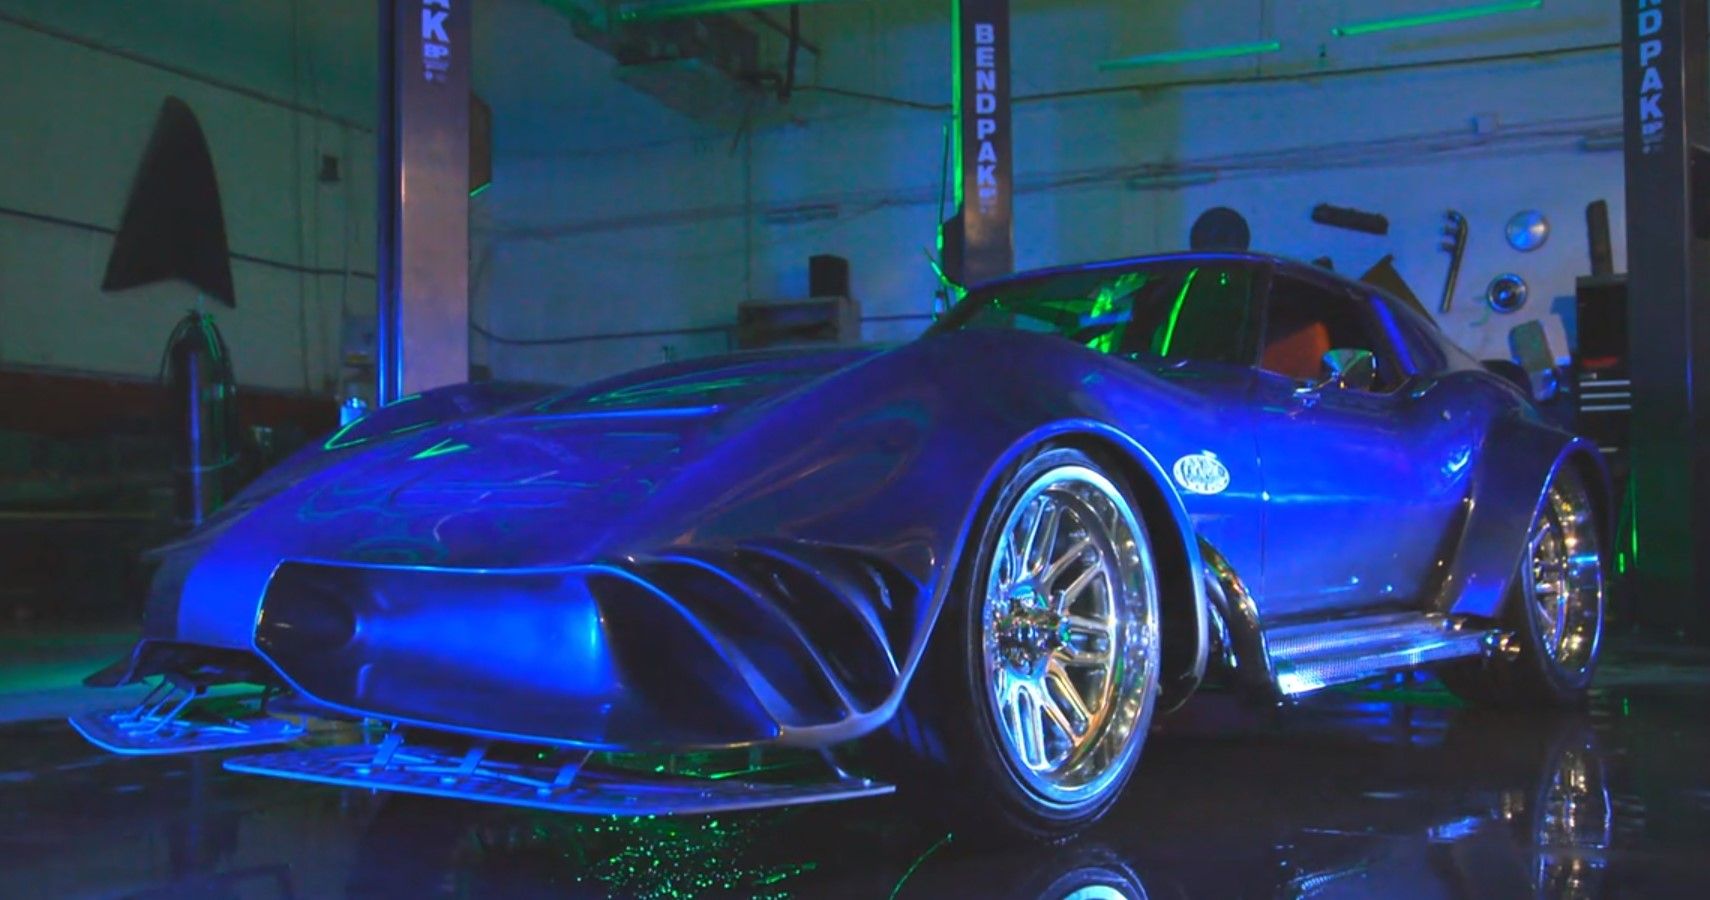 Gotham Garage Chevy Corvette Mako Shark 2 Build hd wallpaper view